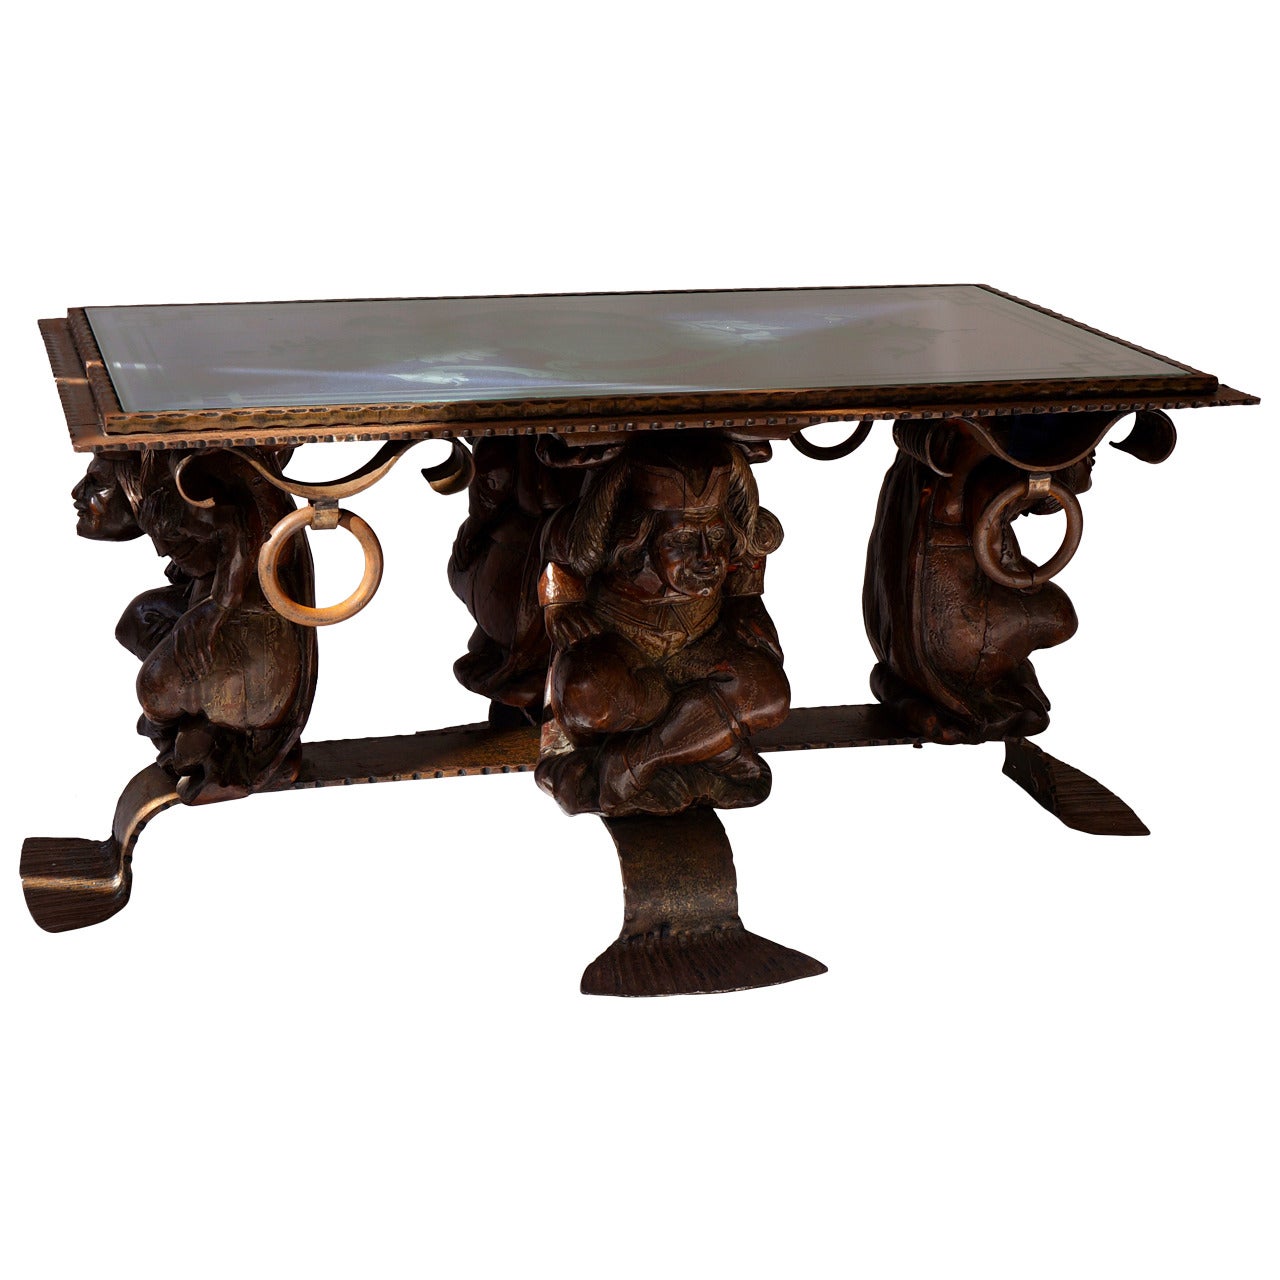 Unique Mid-Century Modern Rustic Metal Coffee Table